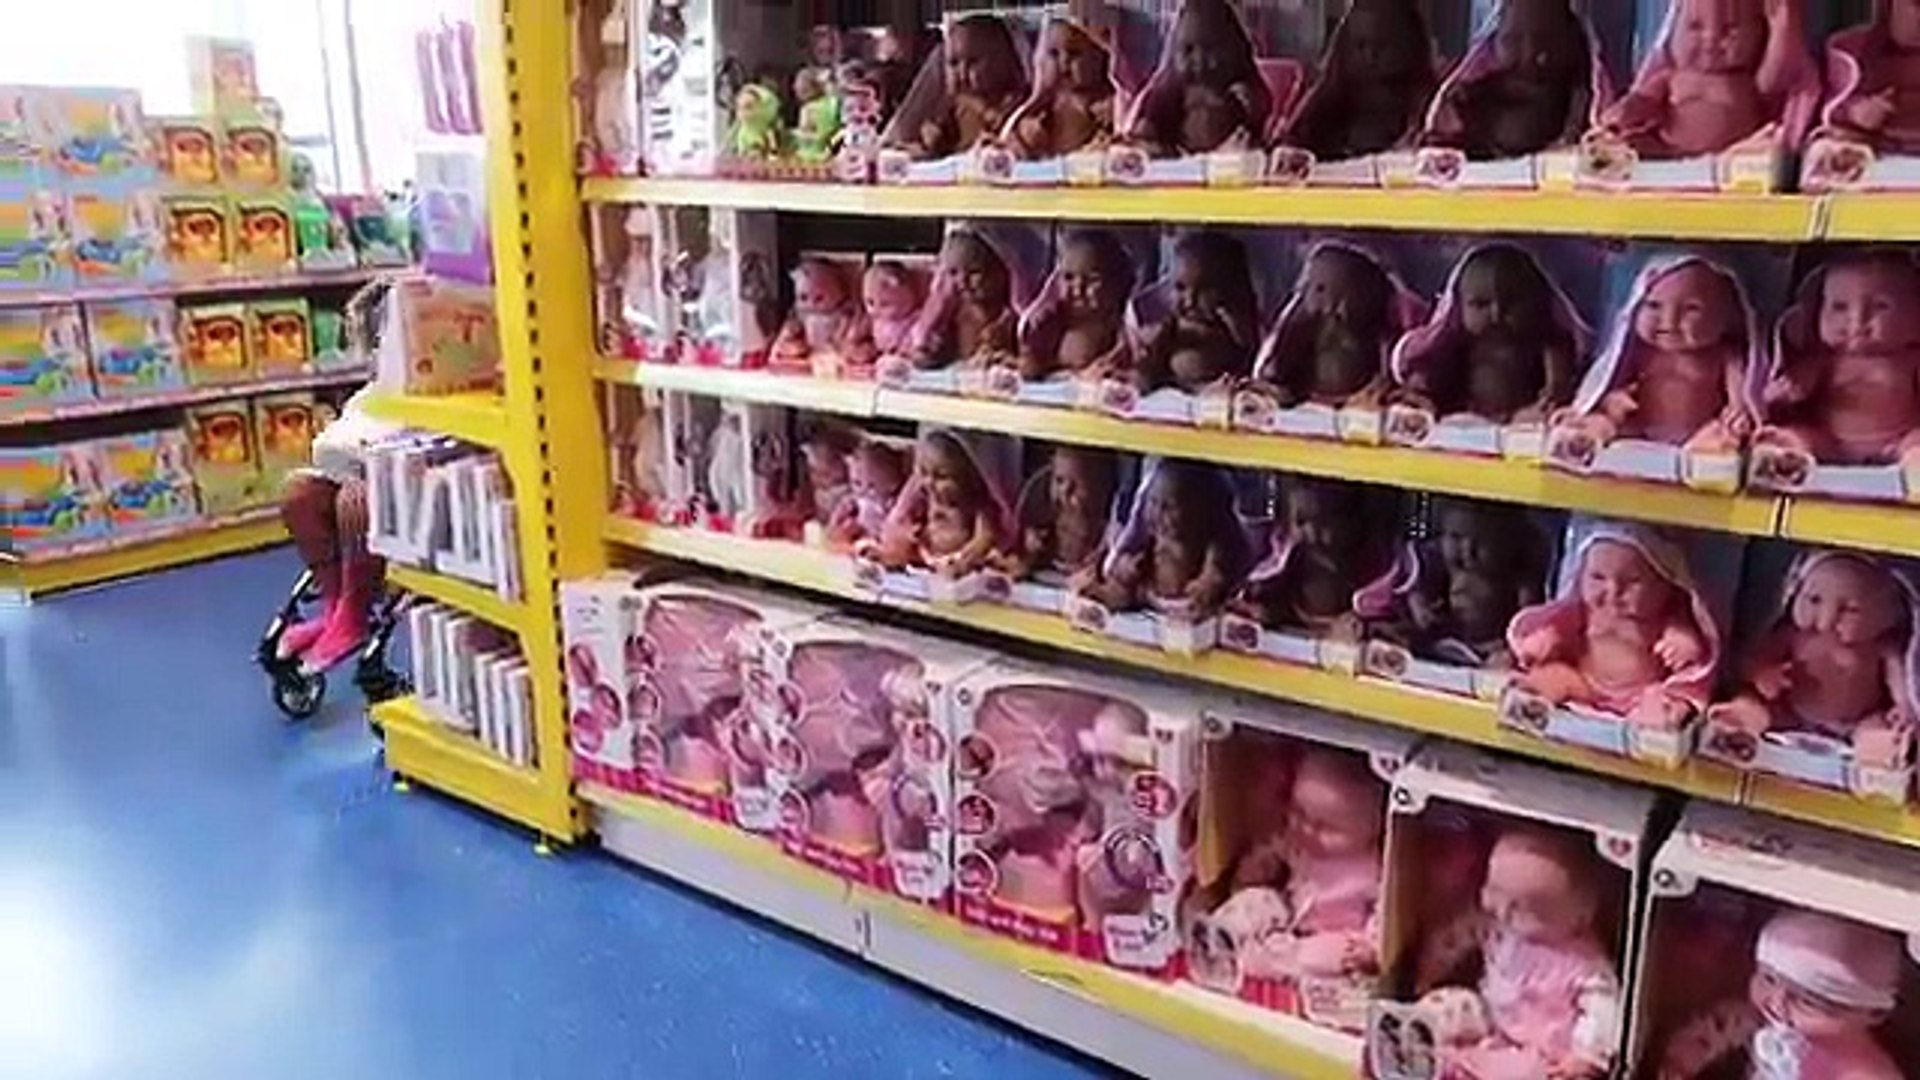 Bad Baby Tiana Poops Gross Chocolate Hide Seek Toy Store video Dailymotion